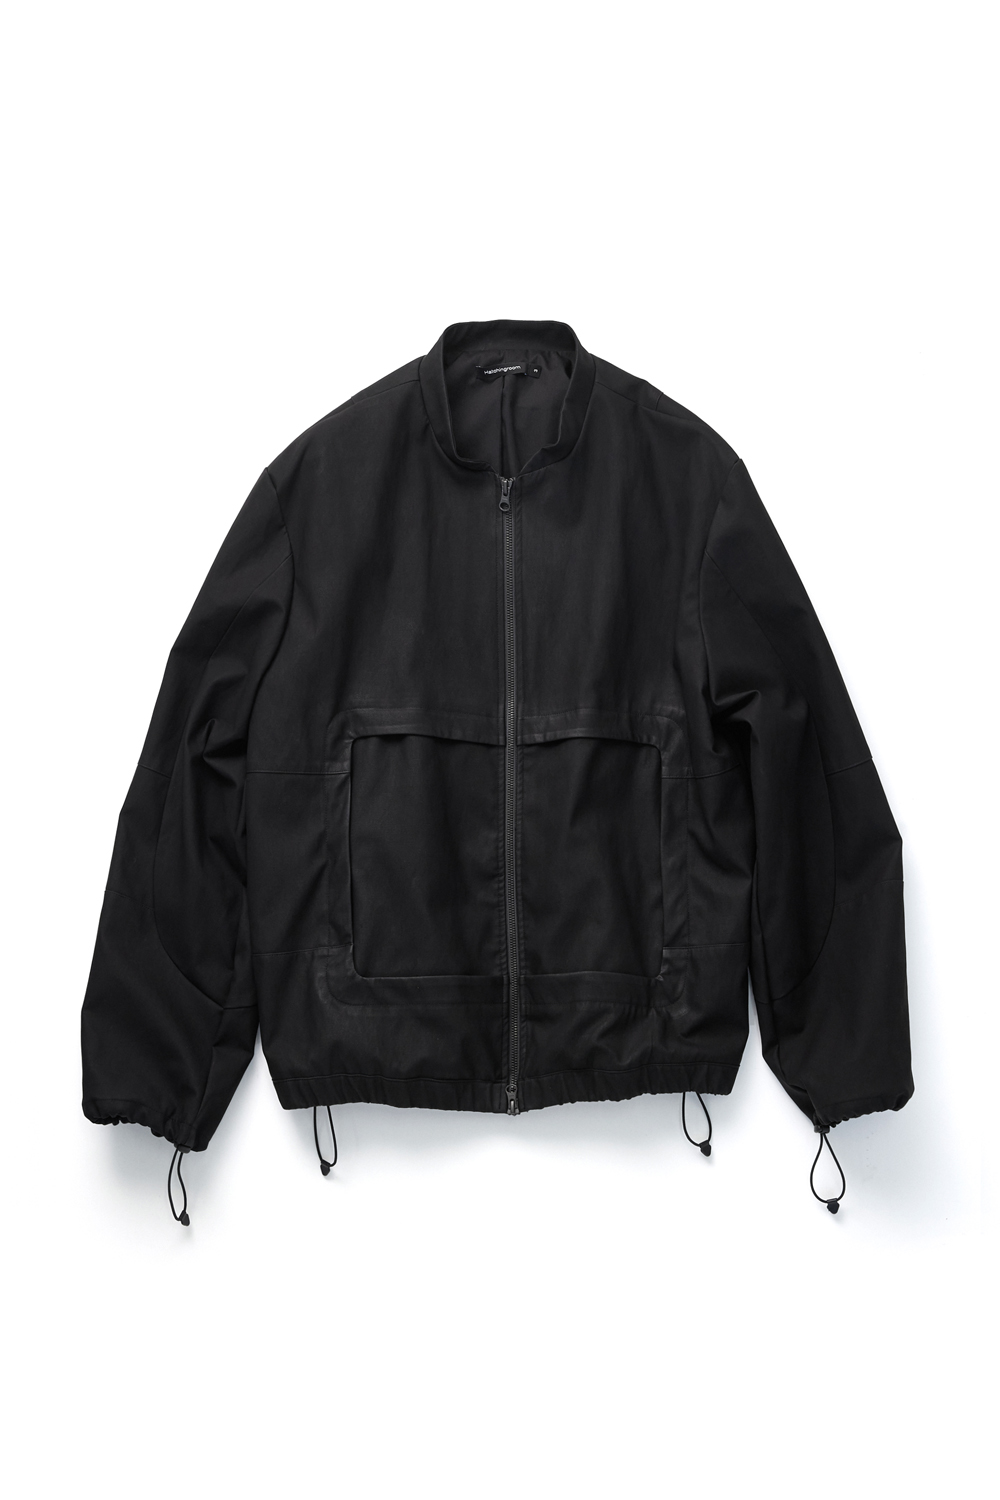 Square Jacket Faux Leather Black